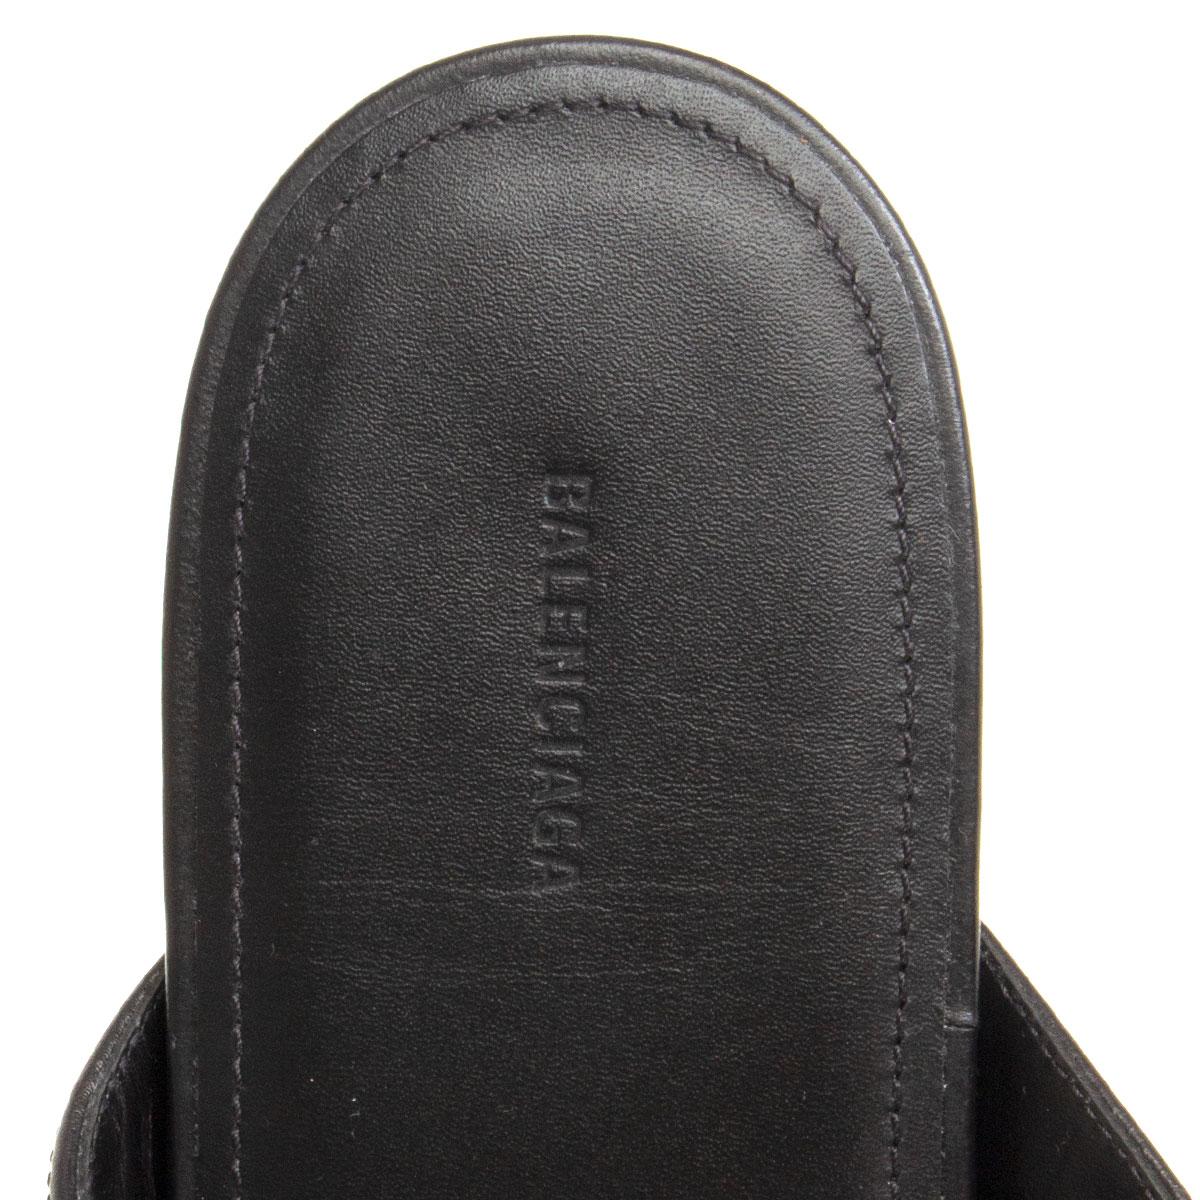 Black BALENCIAGA black leather LOGO Flat Thong Sandals Shoes 37